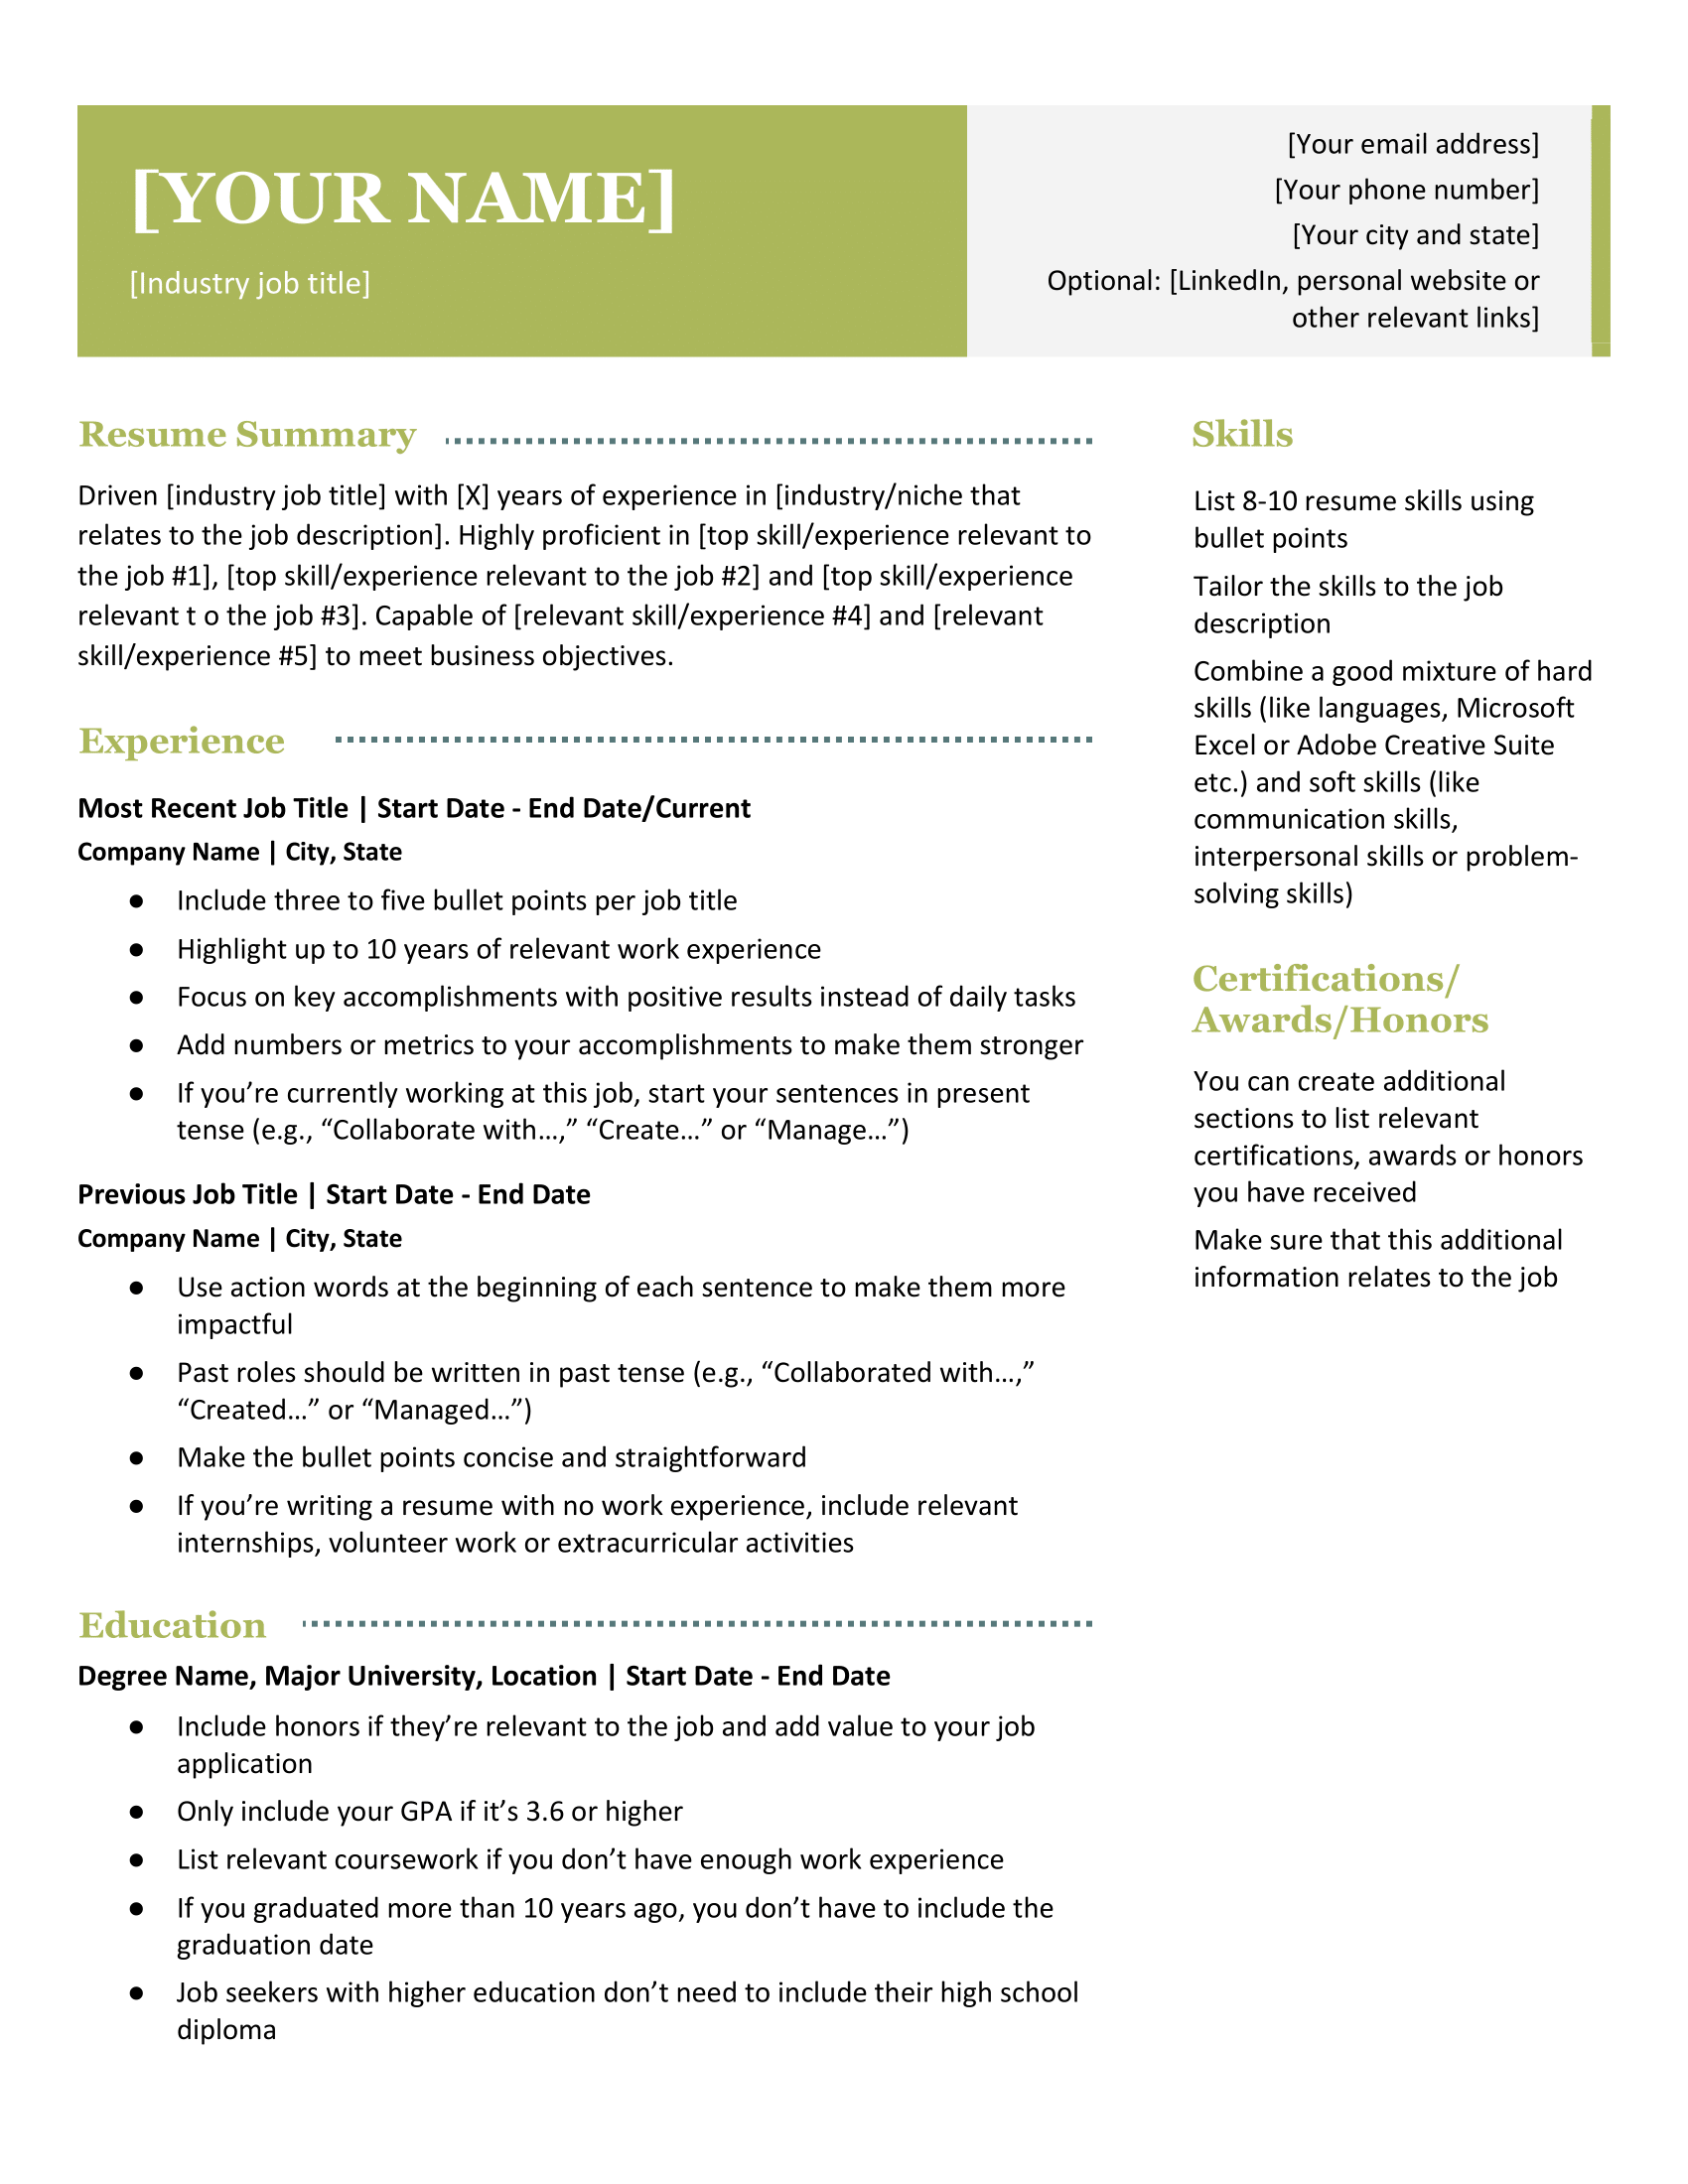 Free resume template pristine